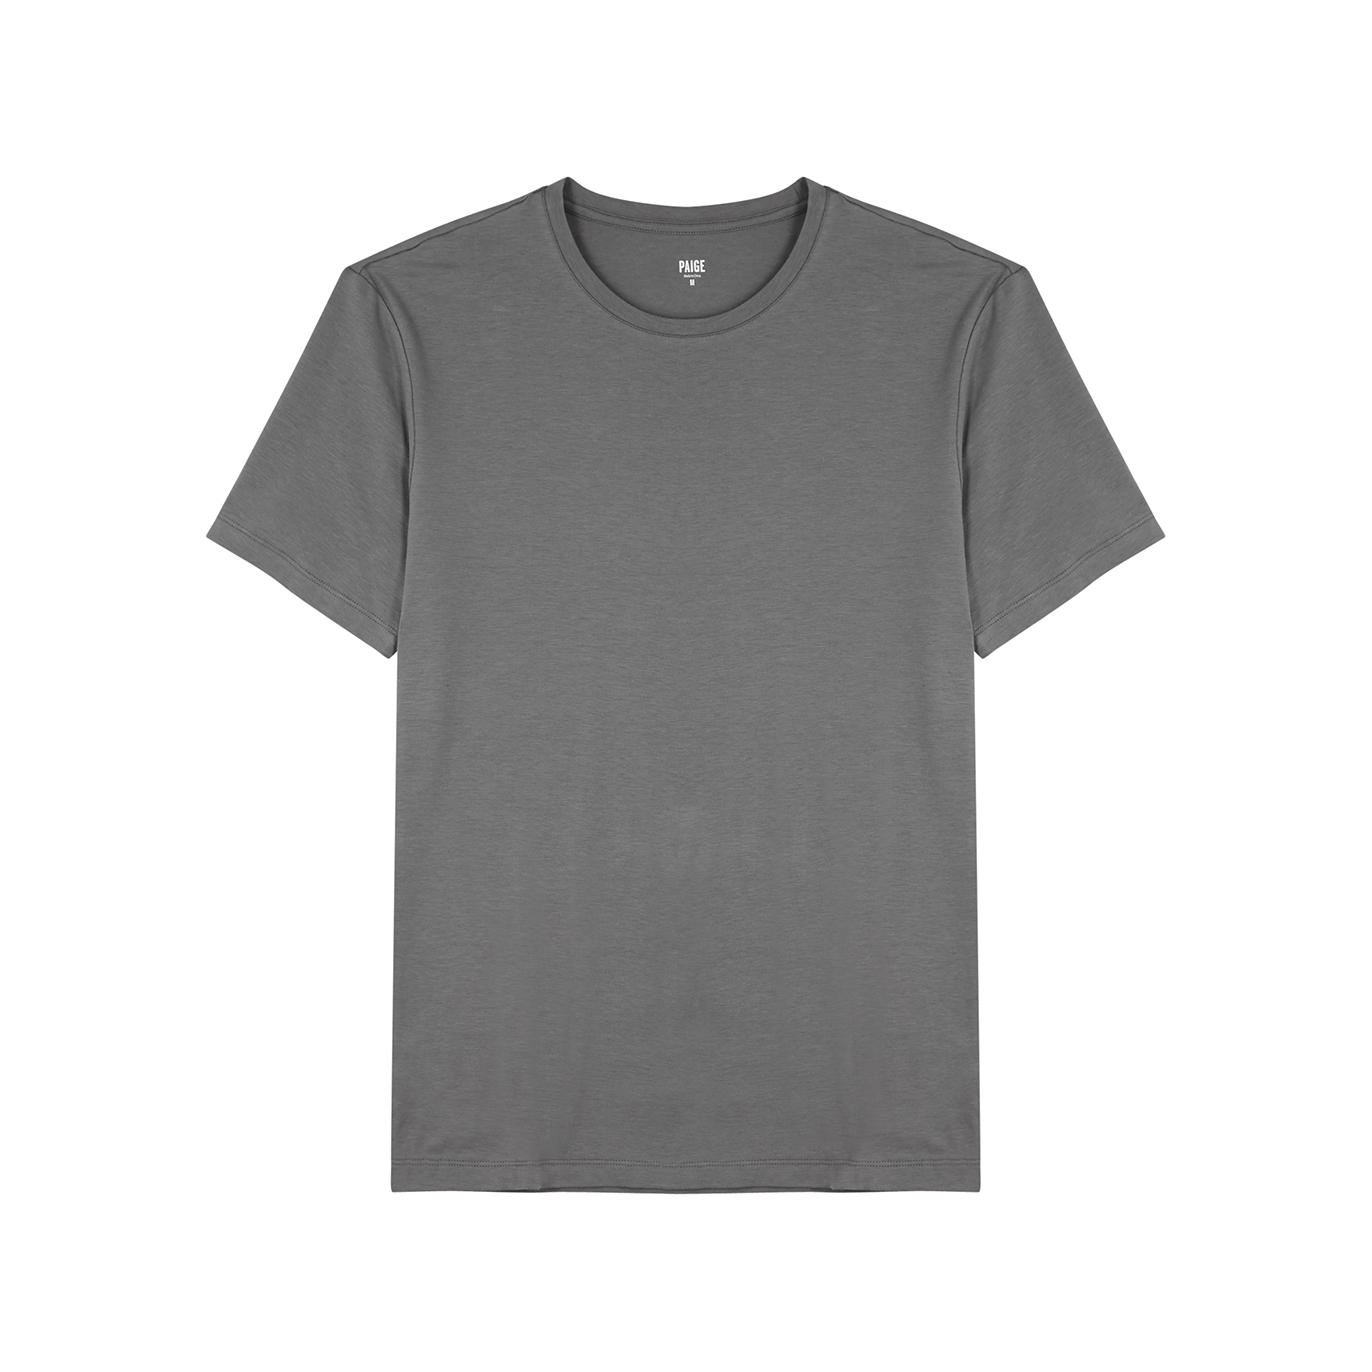 Paige Cash grey stretch-jersey T-shirt - Harvey Nichols